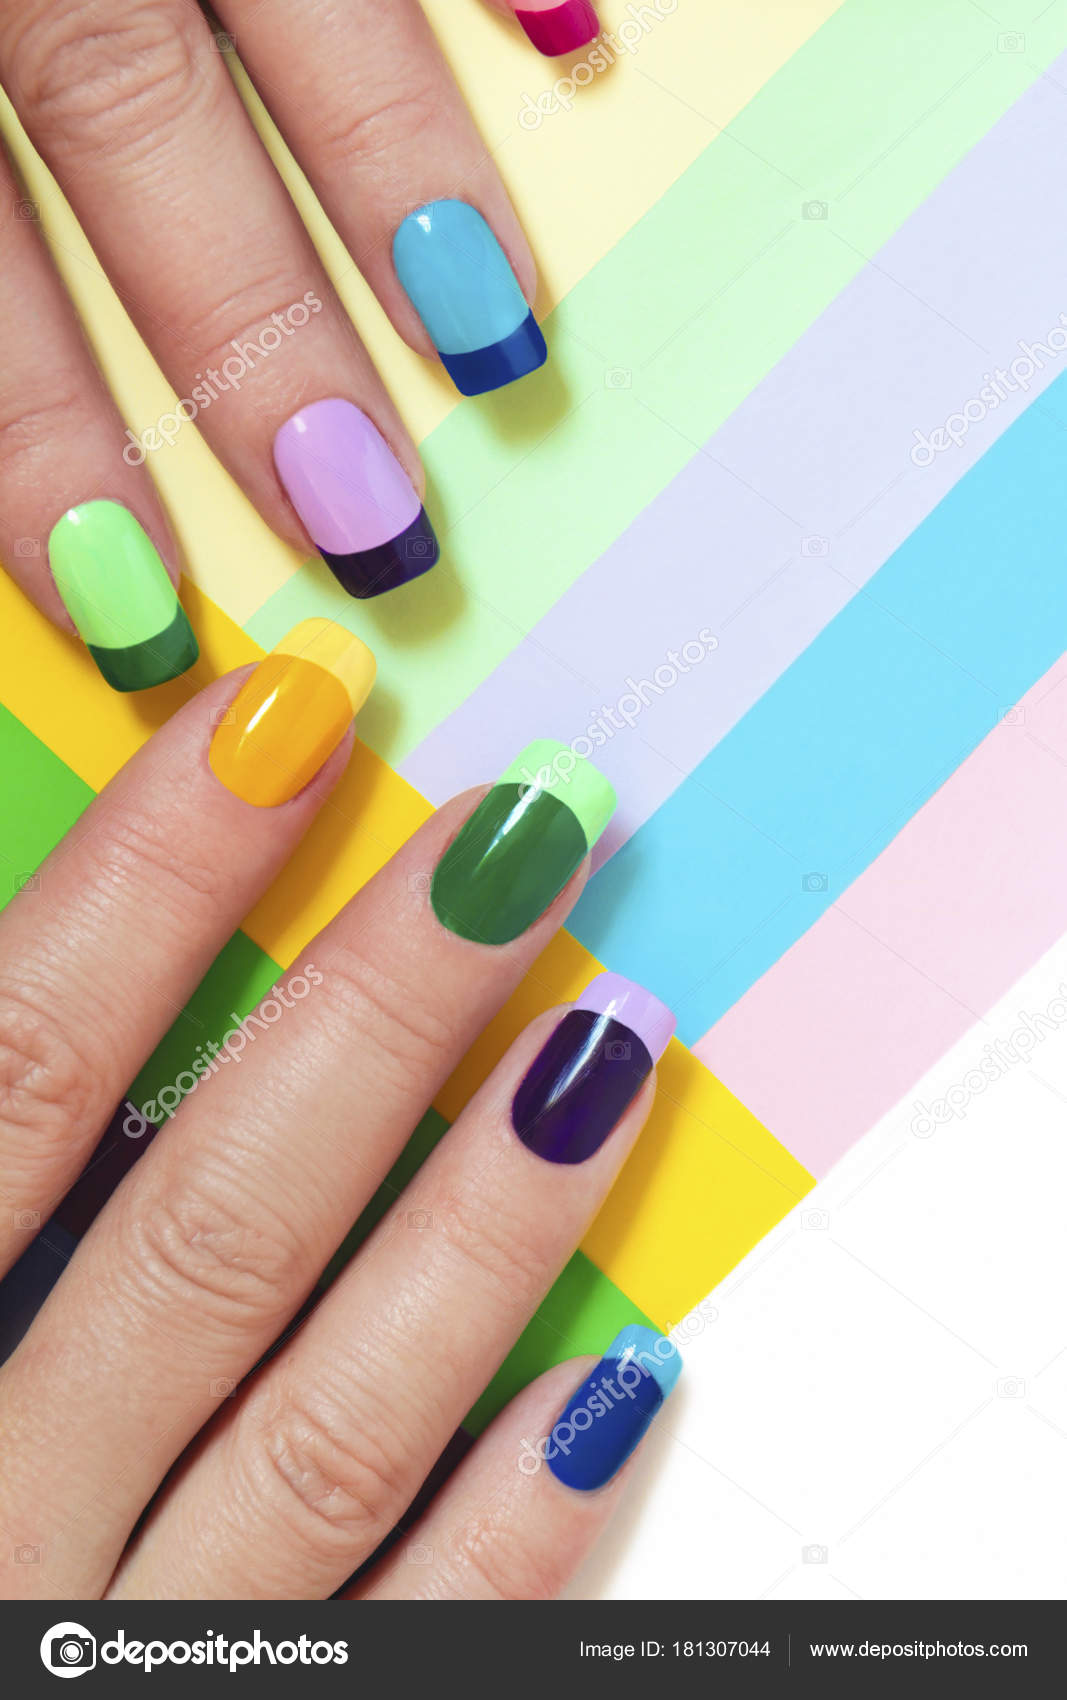 15 Gradient Nail Looks That Span the Color Spectrum